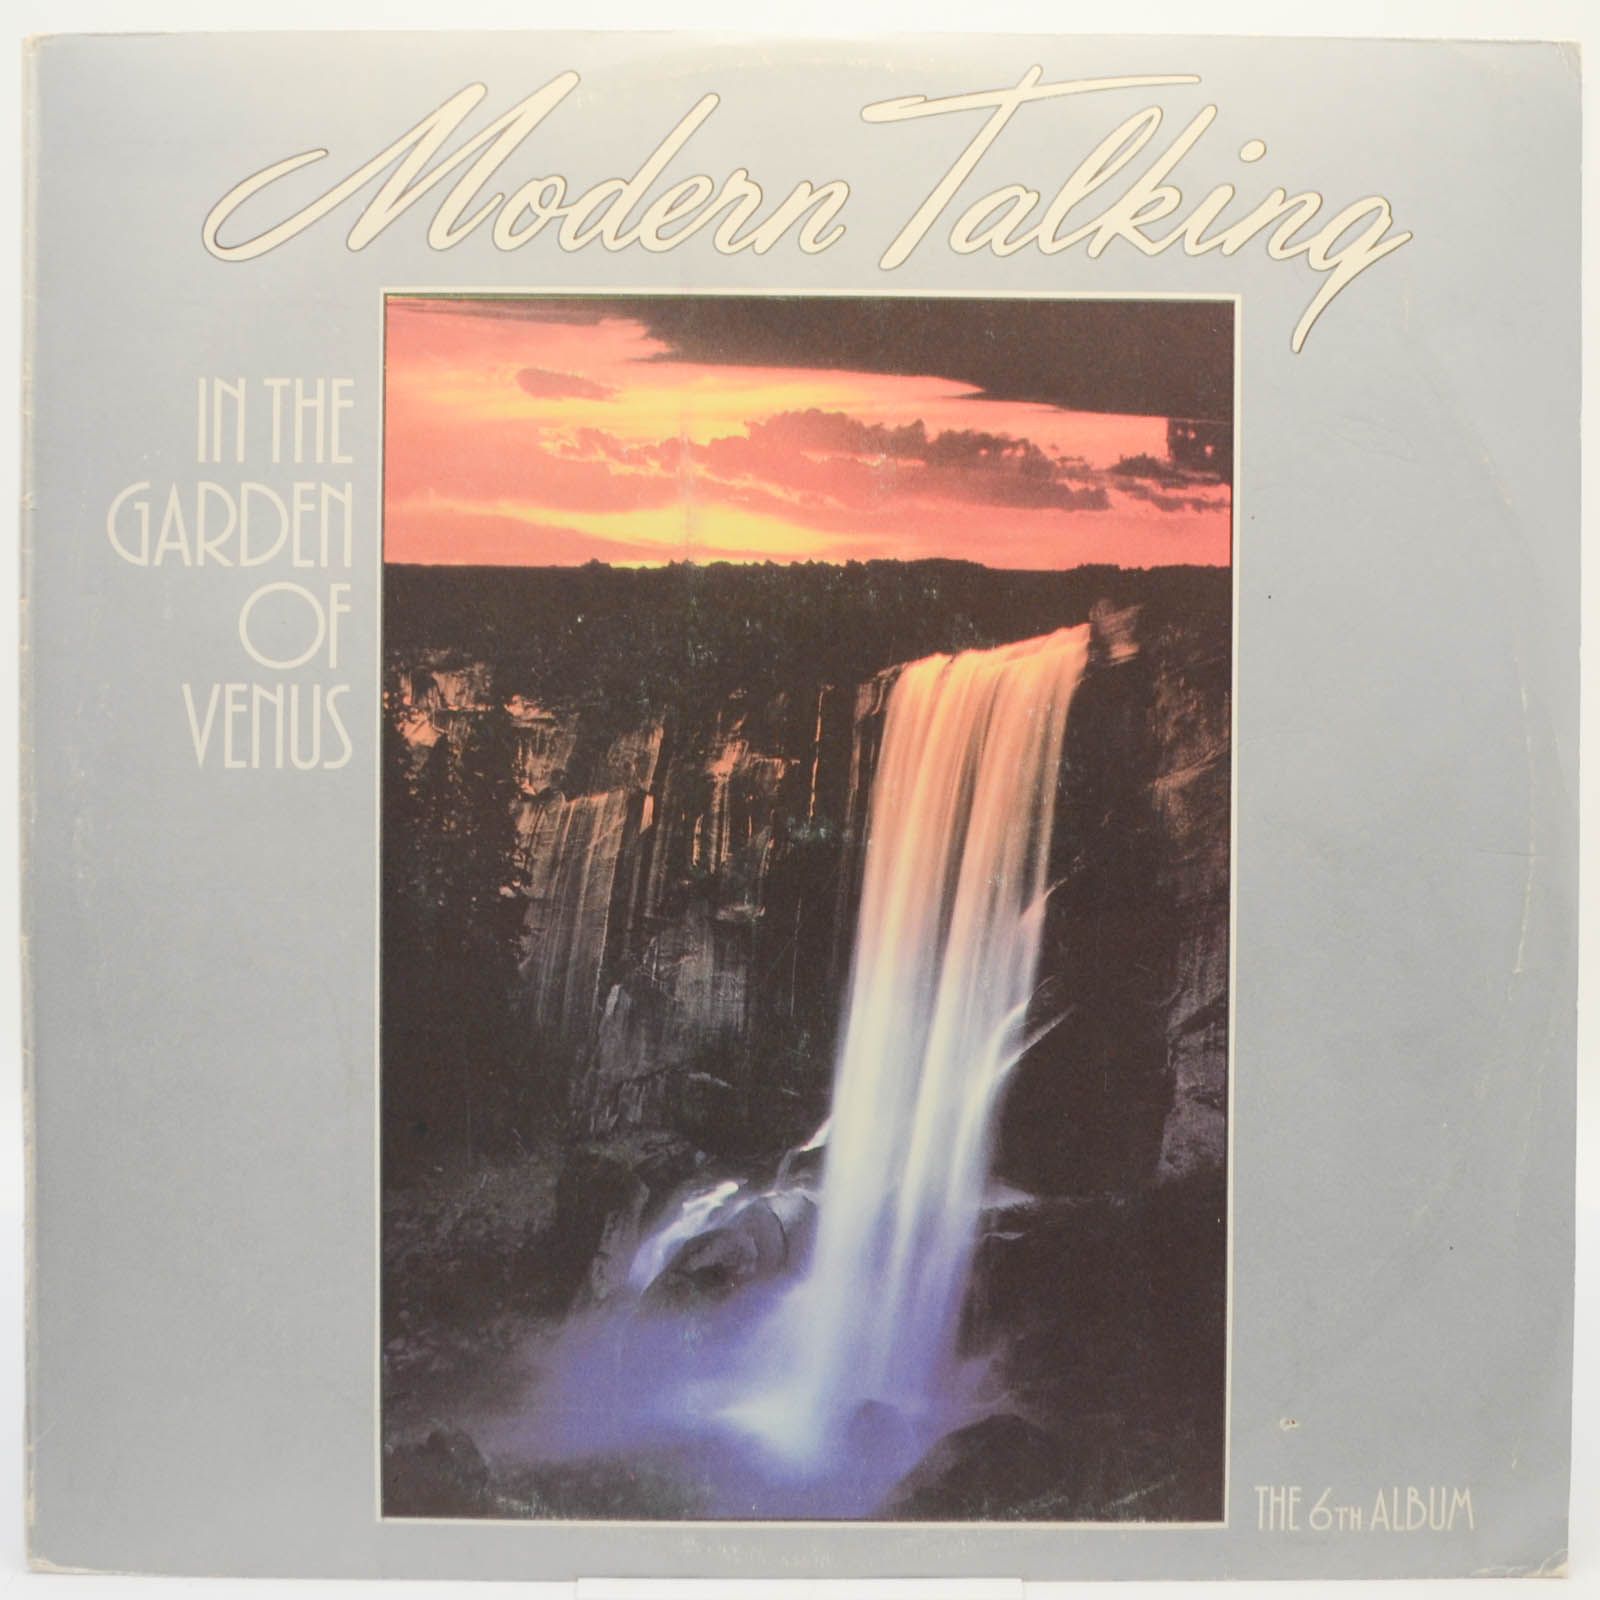 Modern Talking — In The Garden Of Venus - The 6th Album, 1988